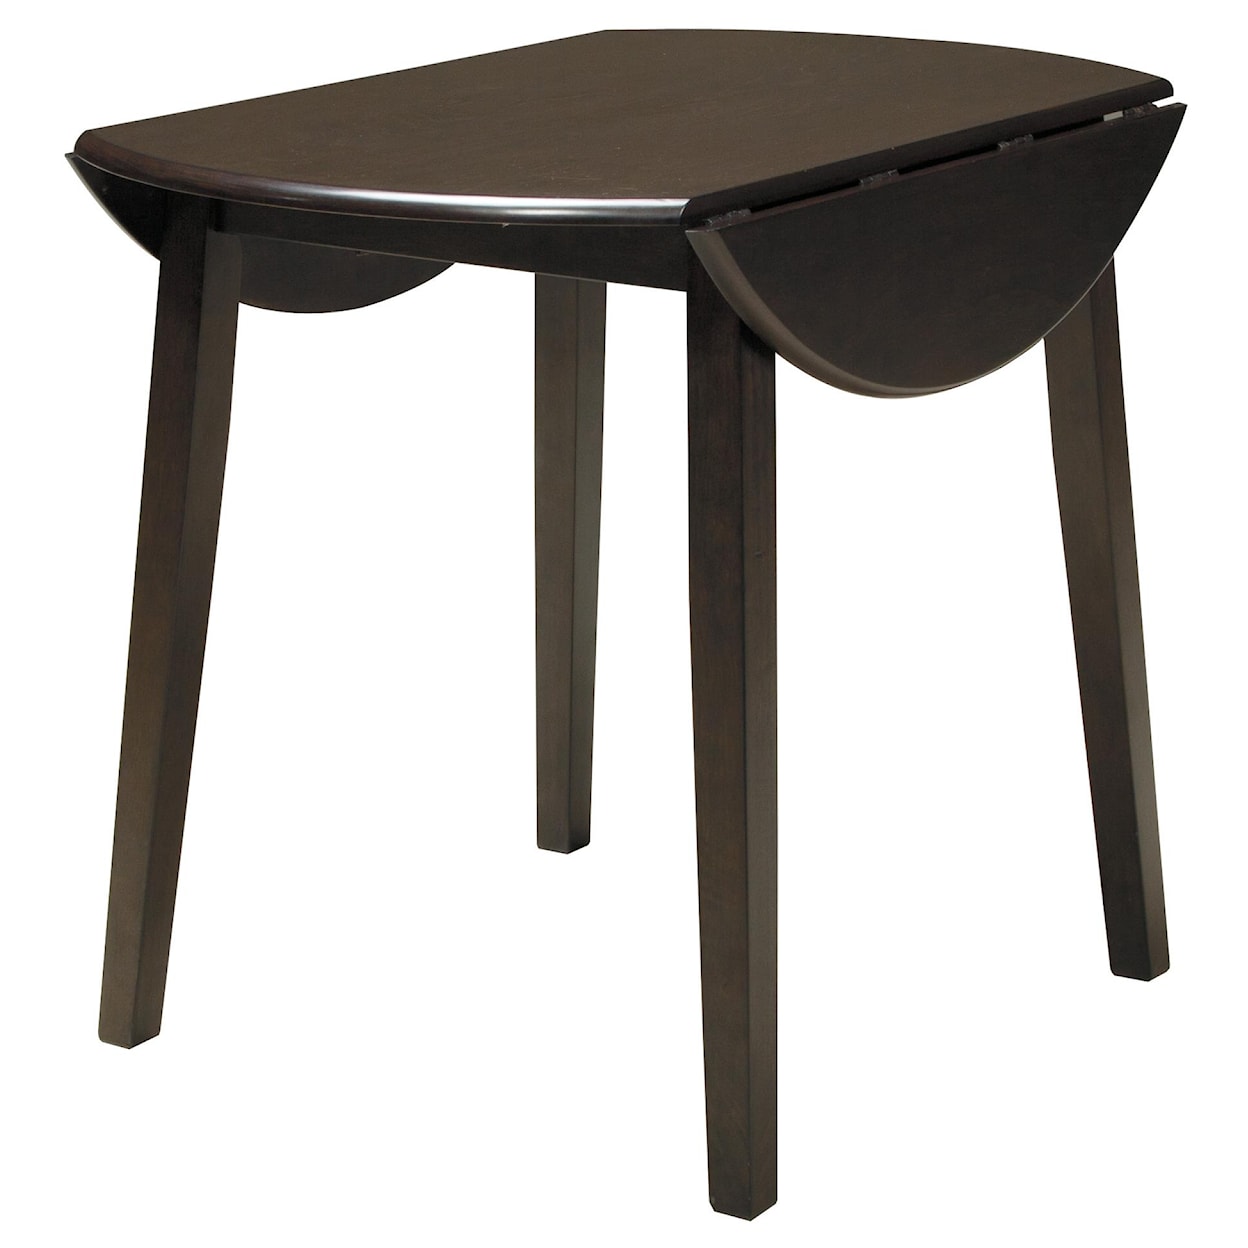 Ashley Furniture Signature Design Hammis 3-Piece Round Drop Leaf Table Set